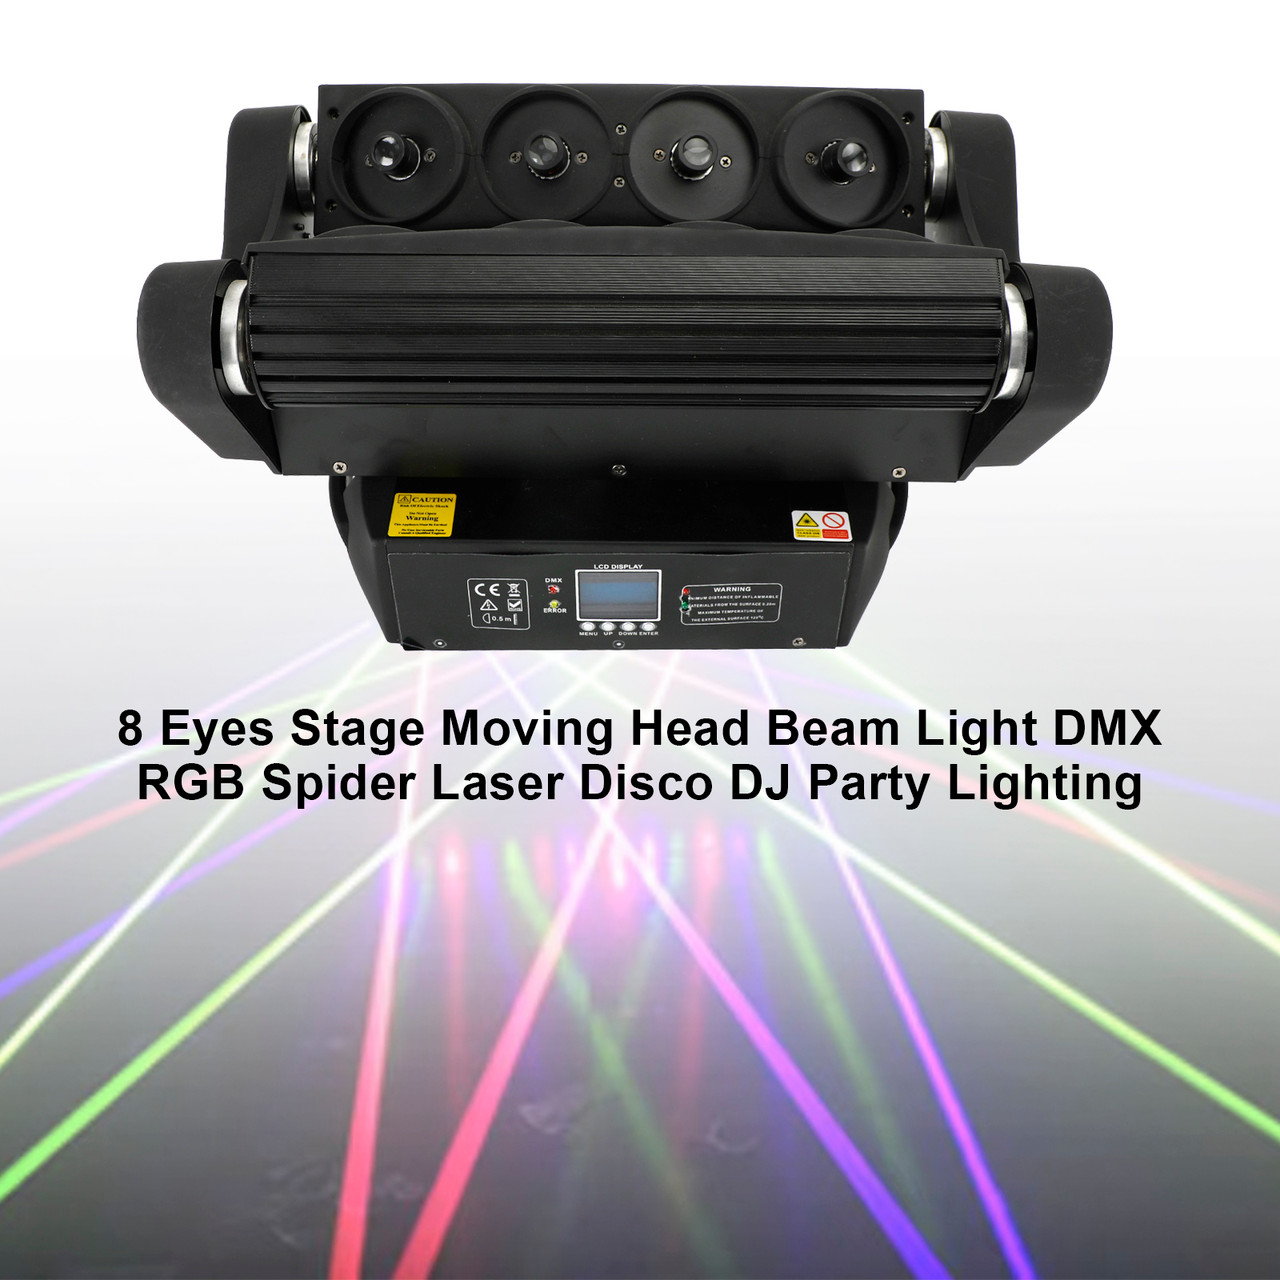 8 Eyes Stage Moving Head Beam Light DMX RGB Spider Laser Disco DJ Party Lighting